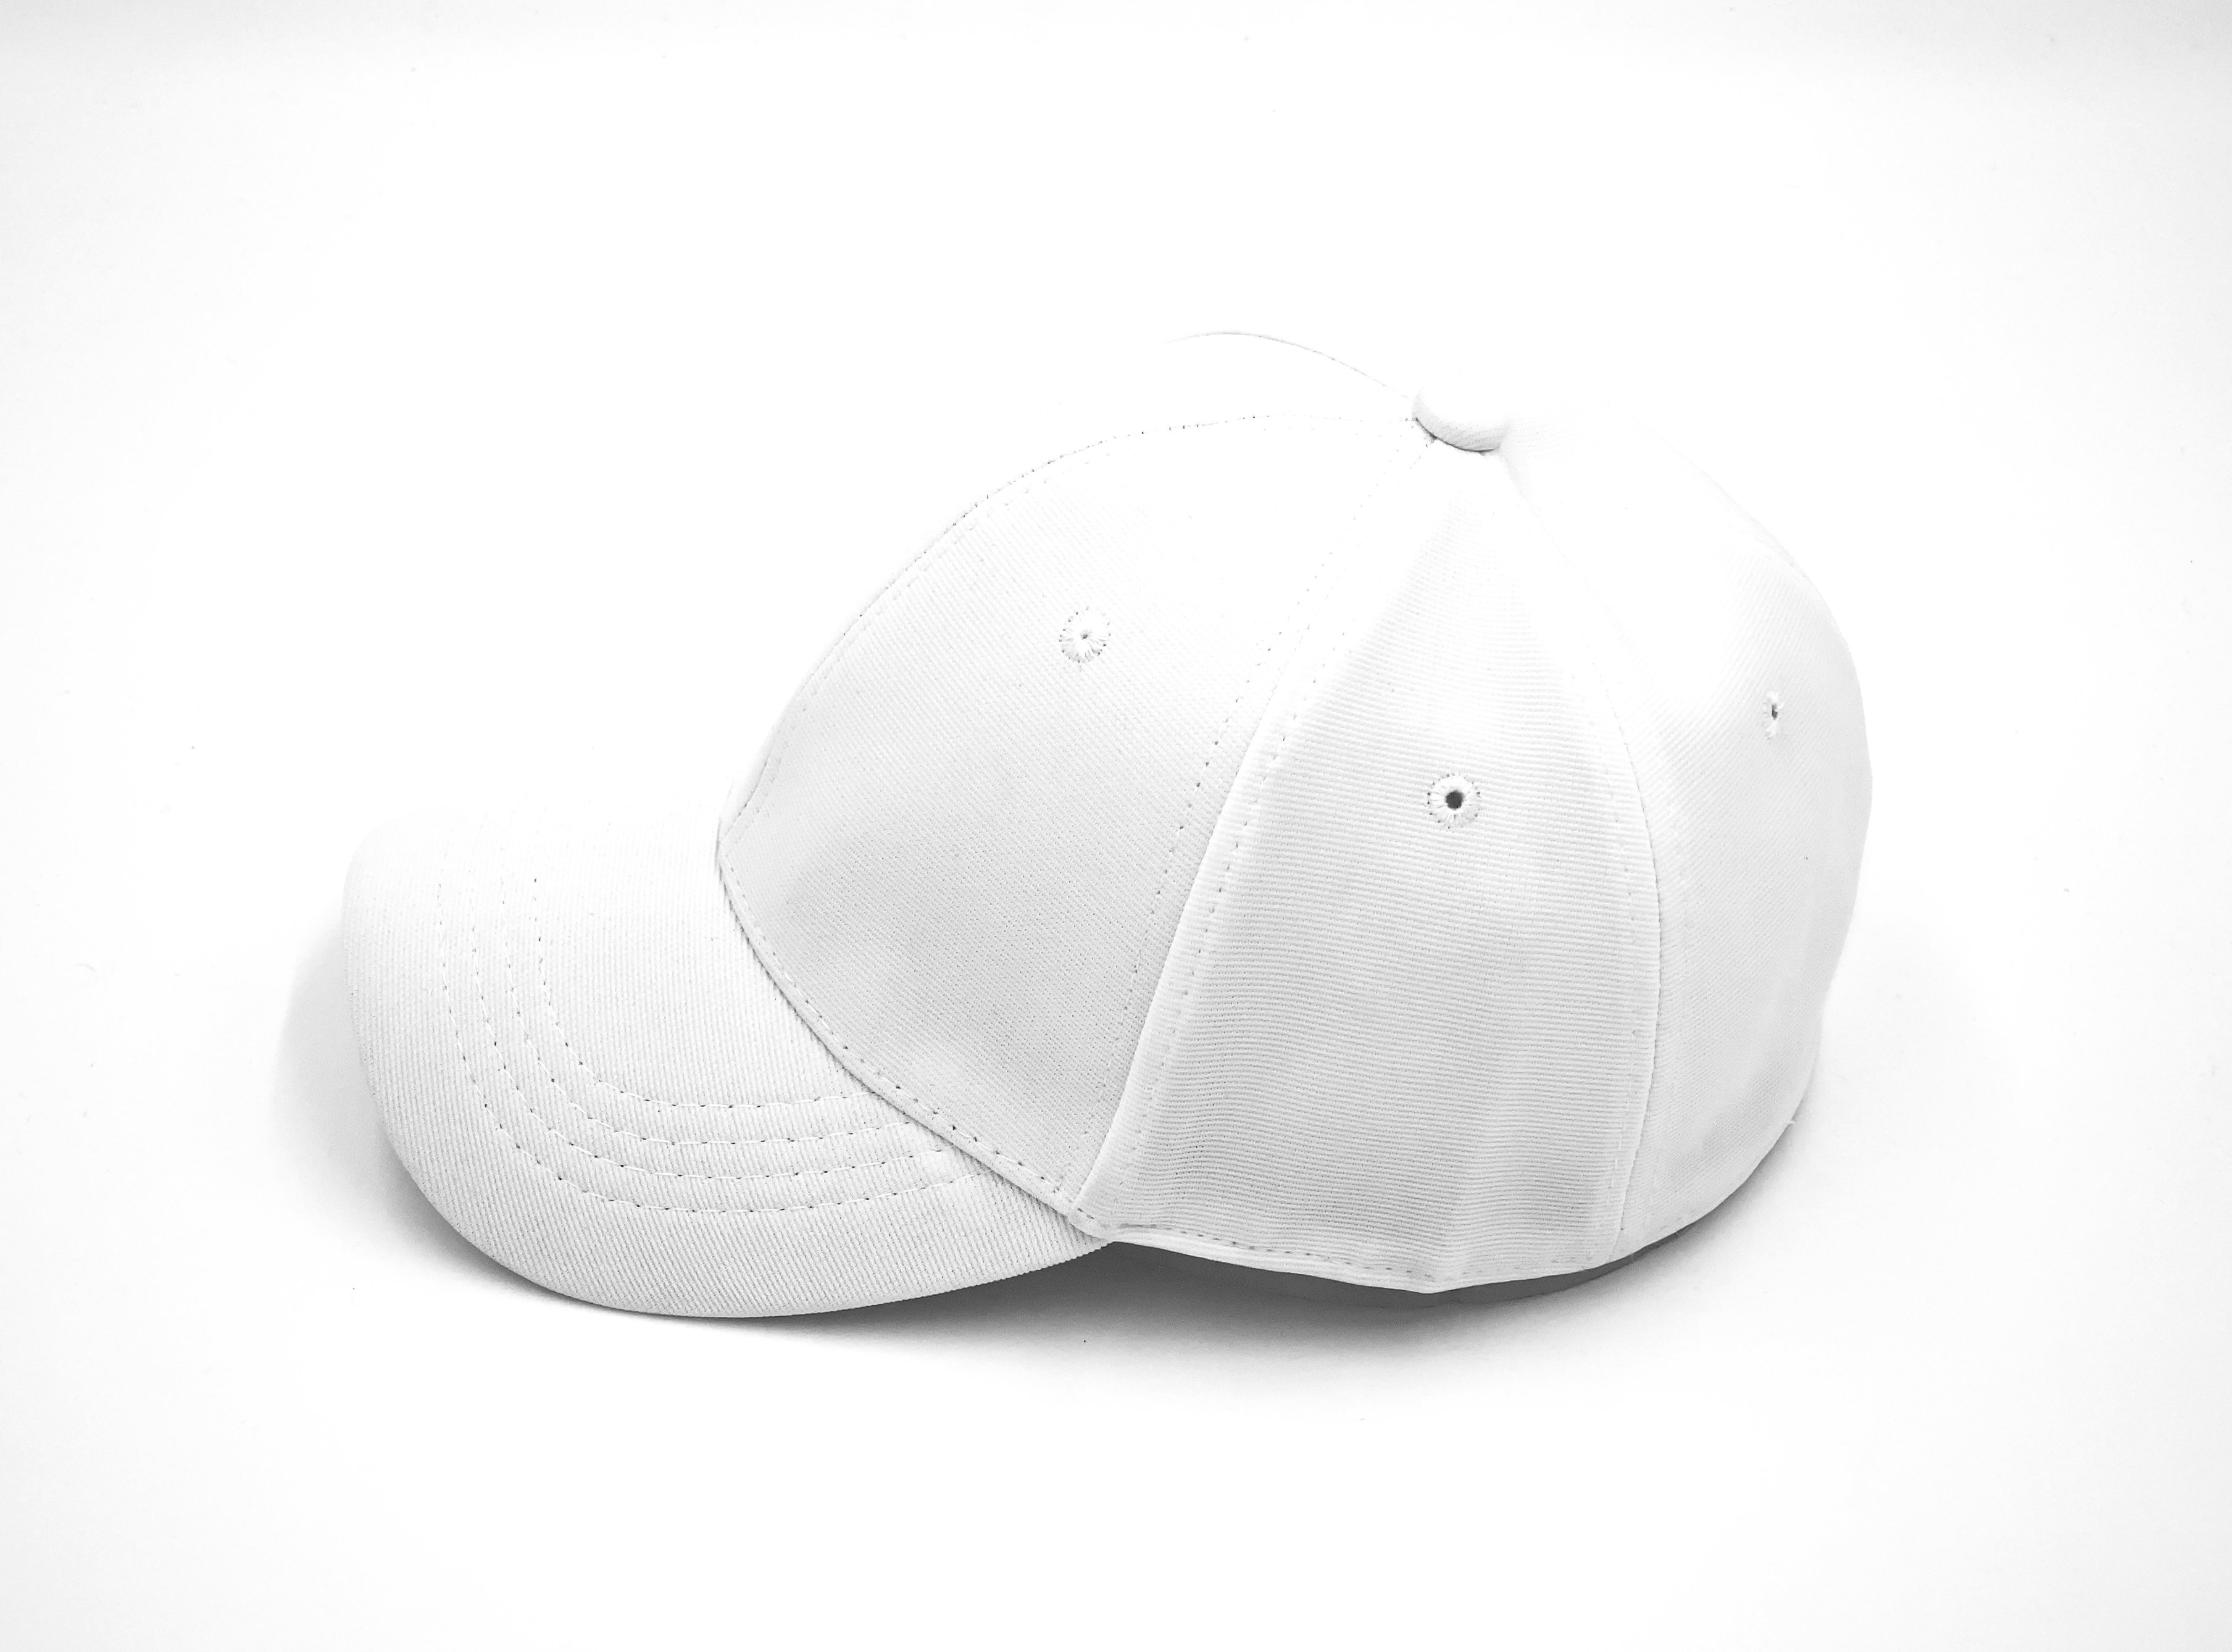 Summer cap